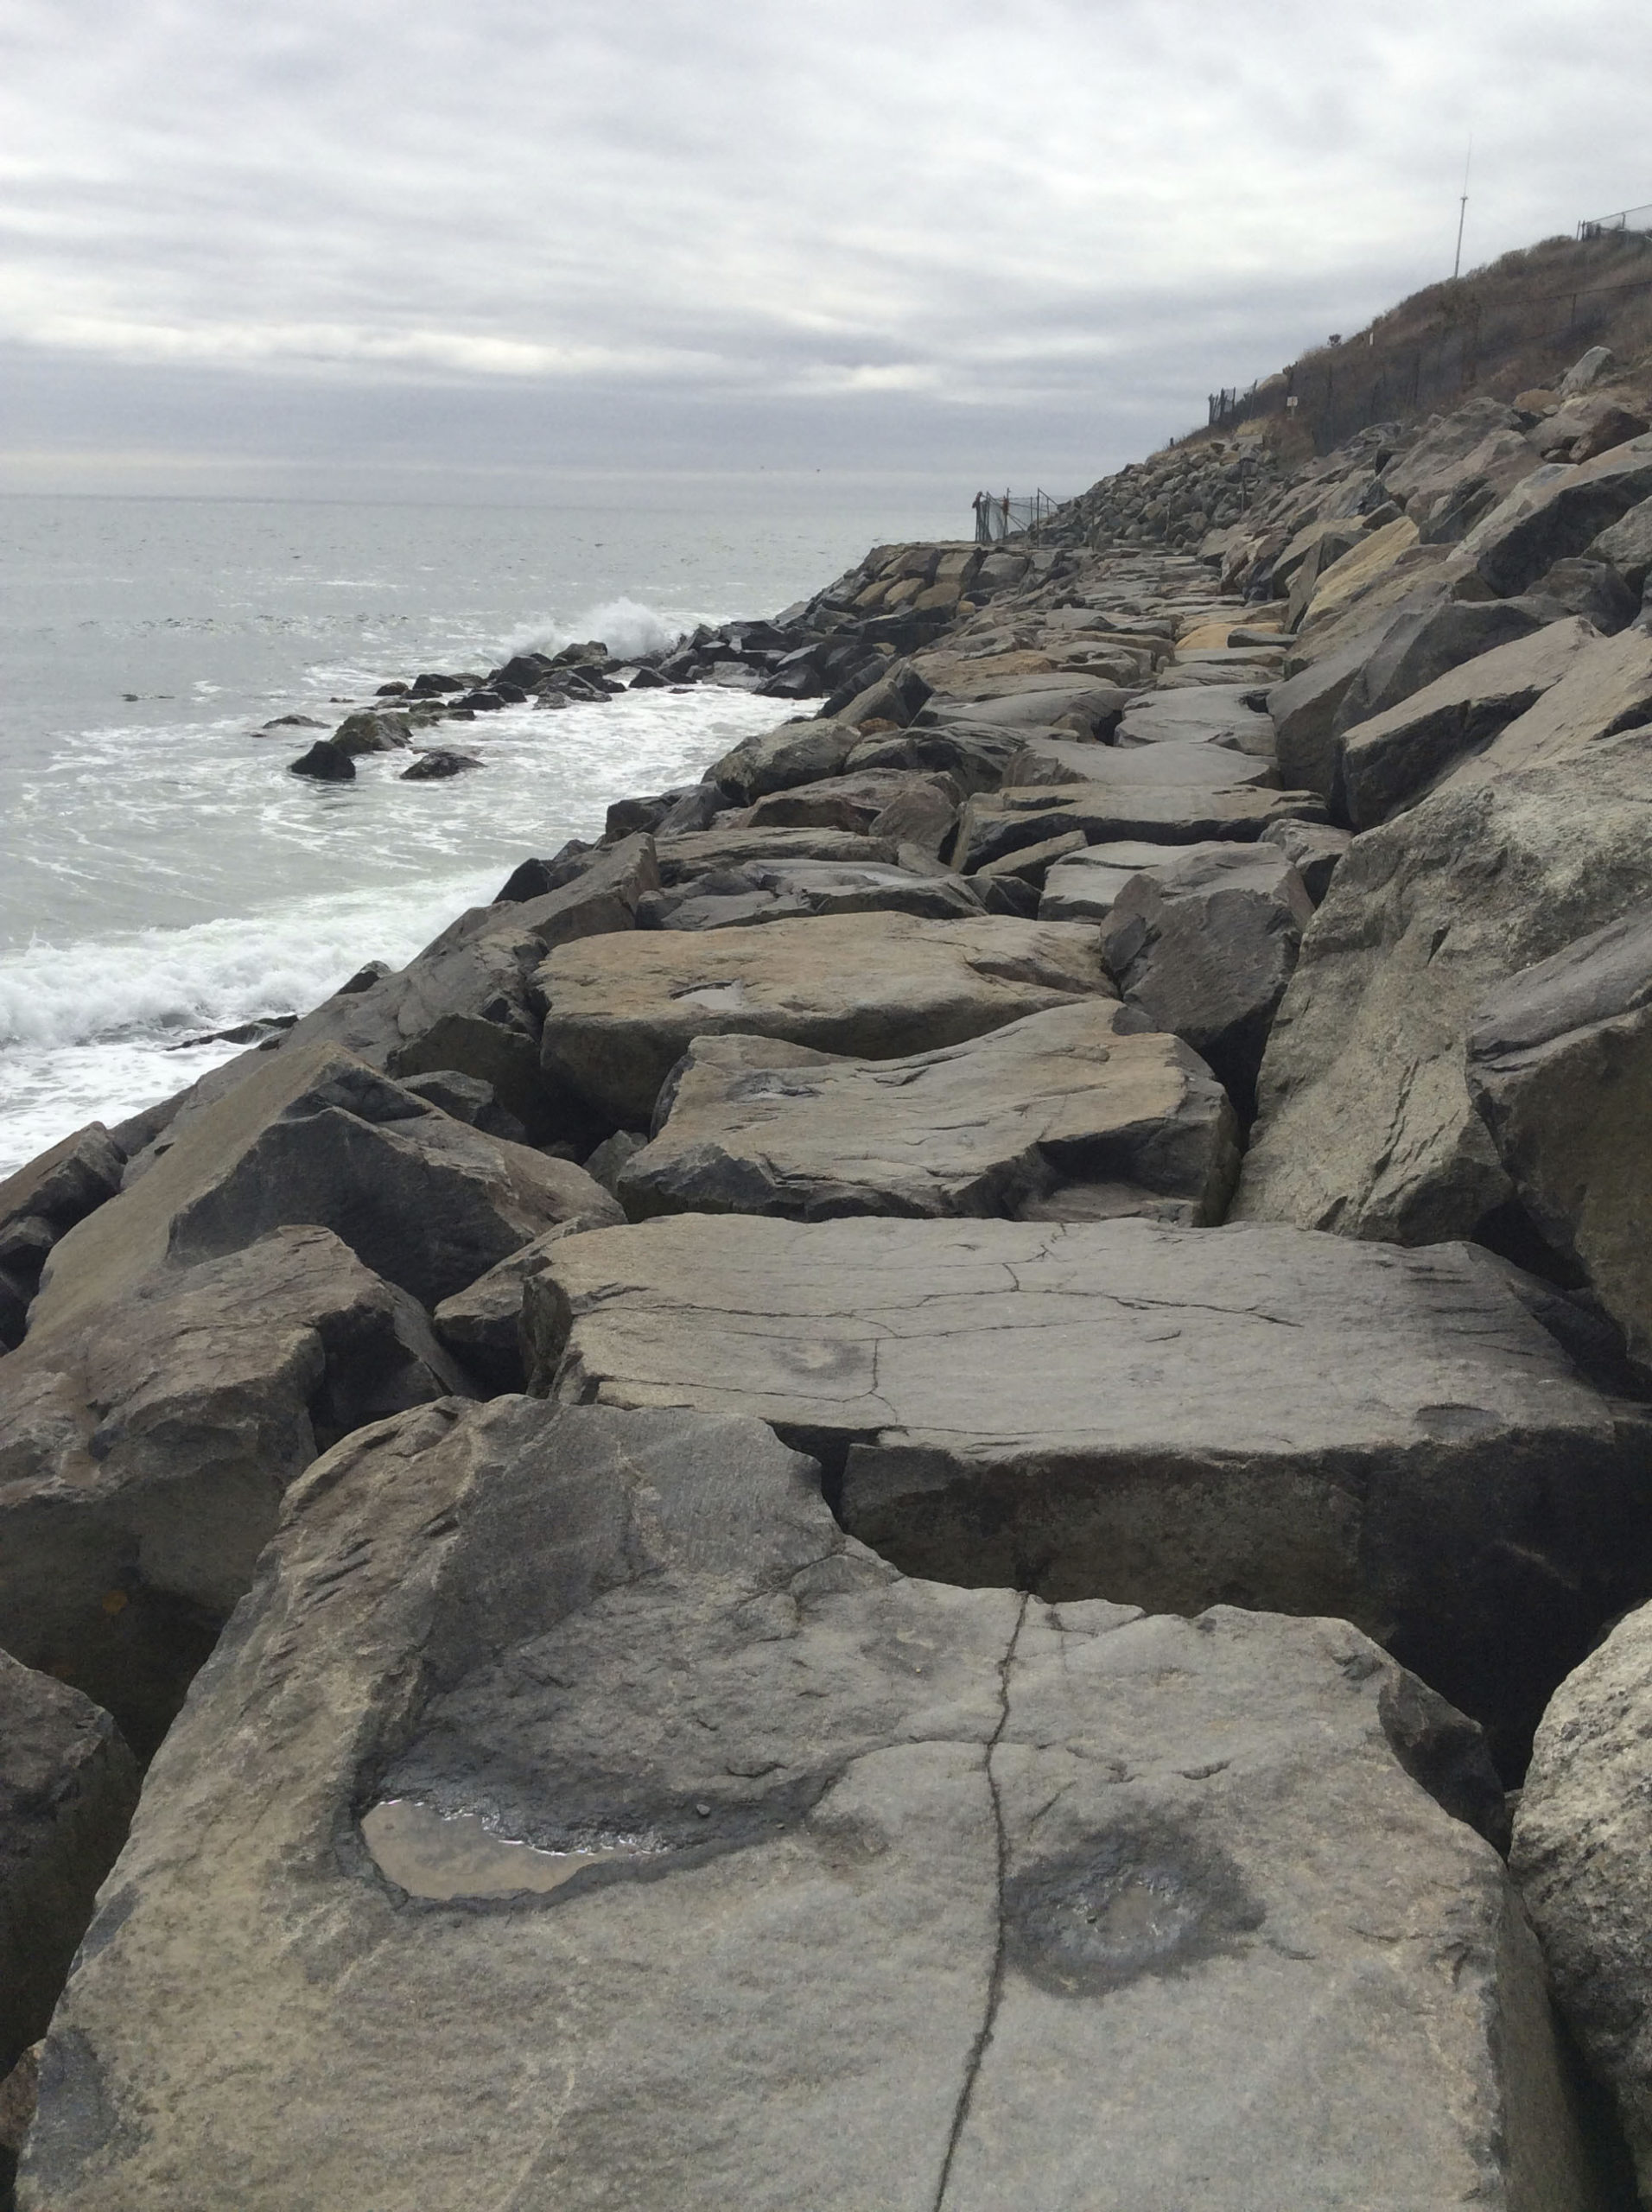 The sea encroaches on the rocks at Montauk Point. BRYAN BOYHAN